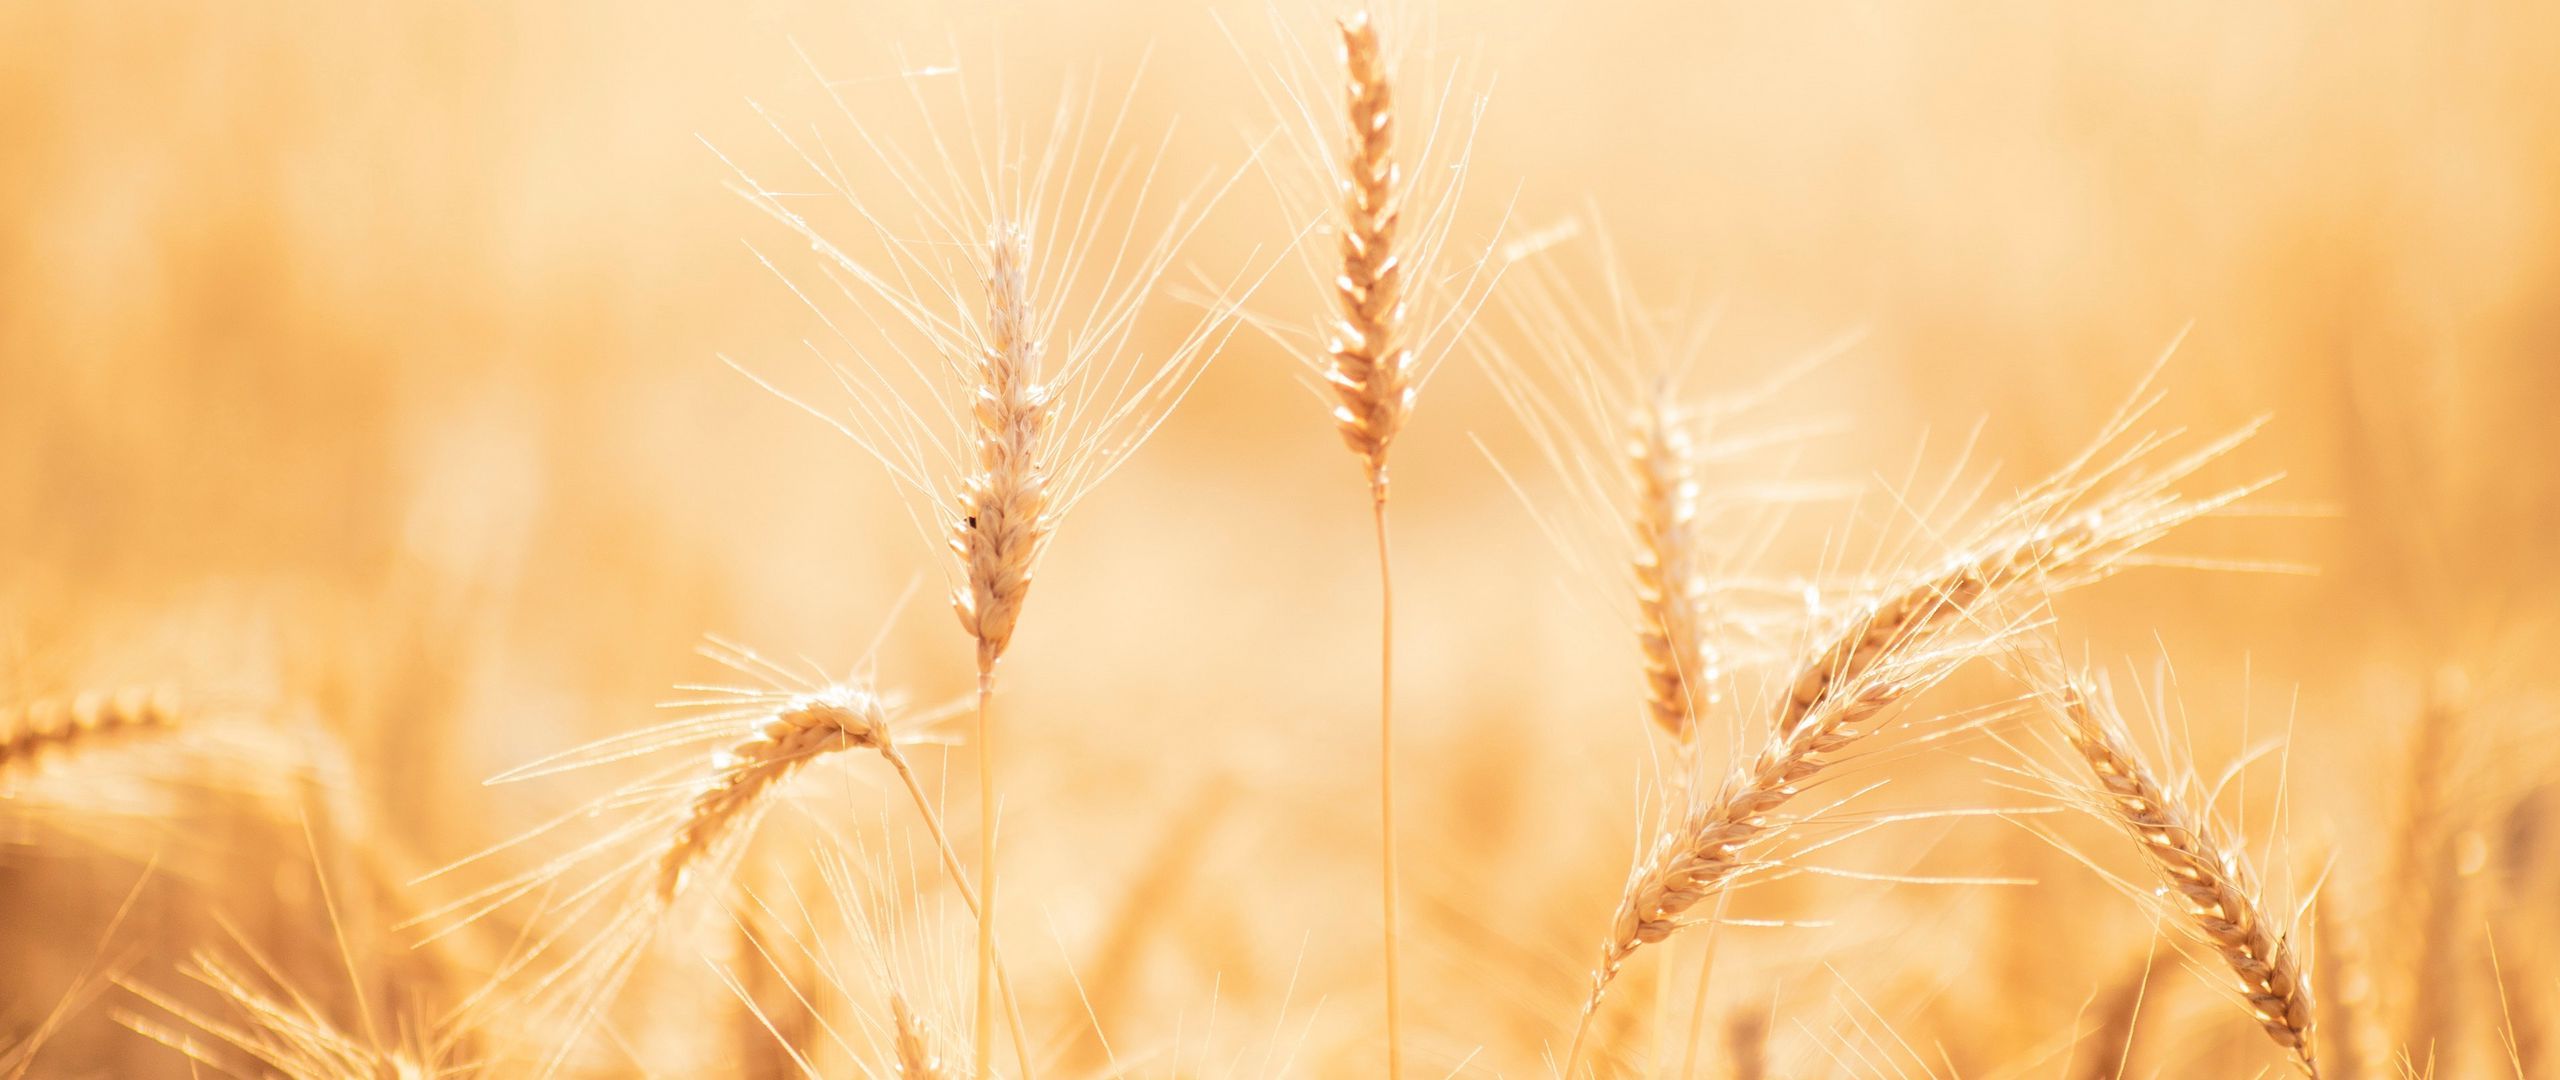 Download wallpaper 2560x1080 spikelets, wheat, field, dry, harvest